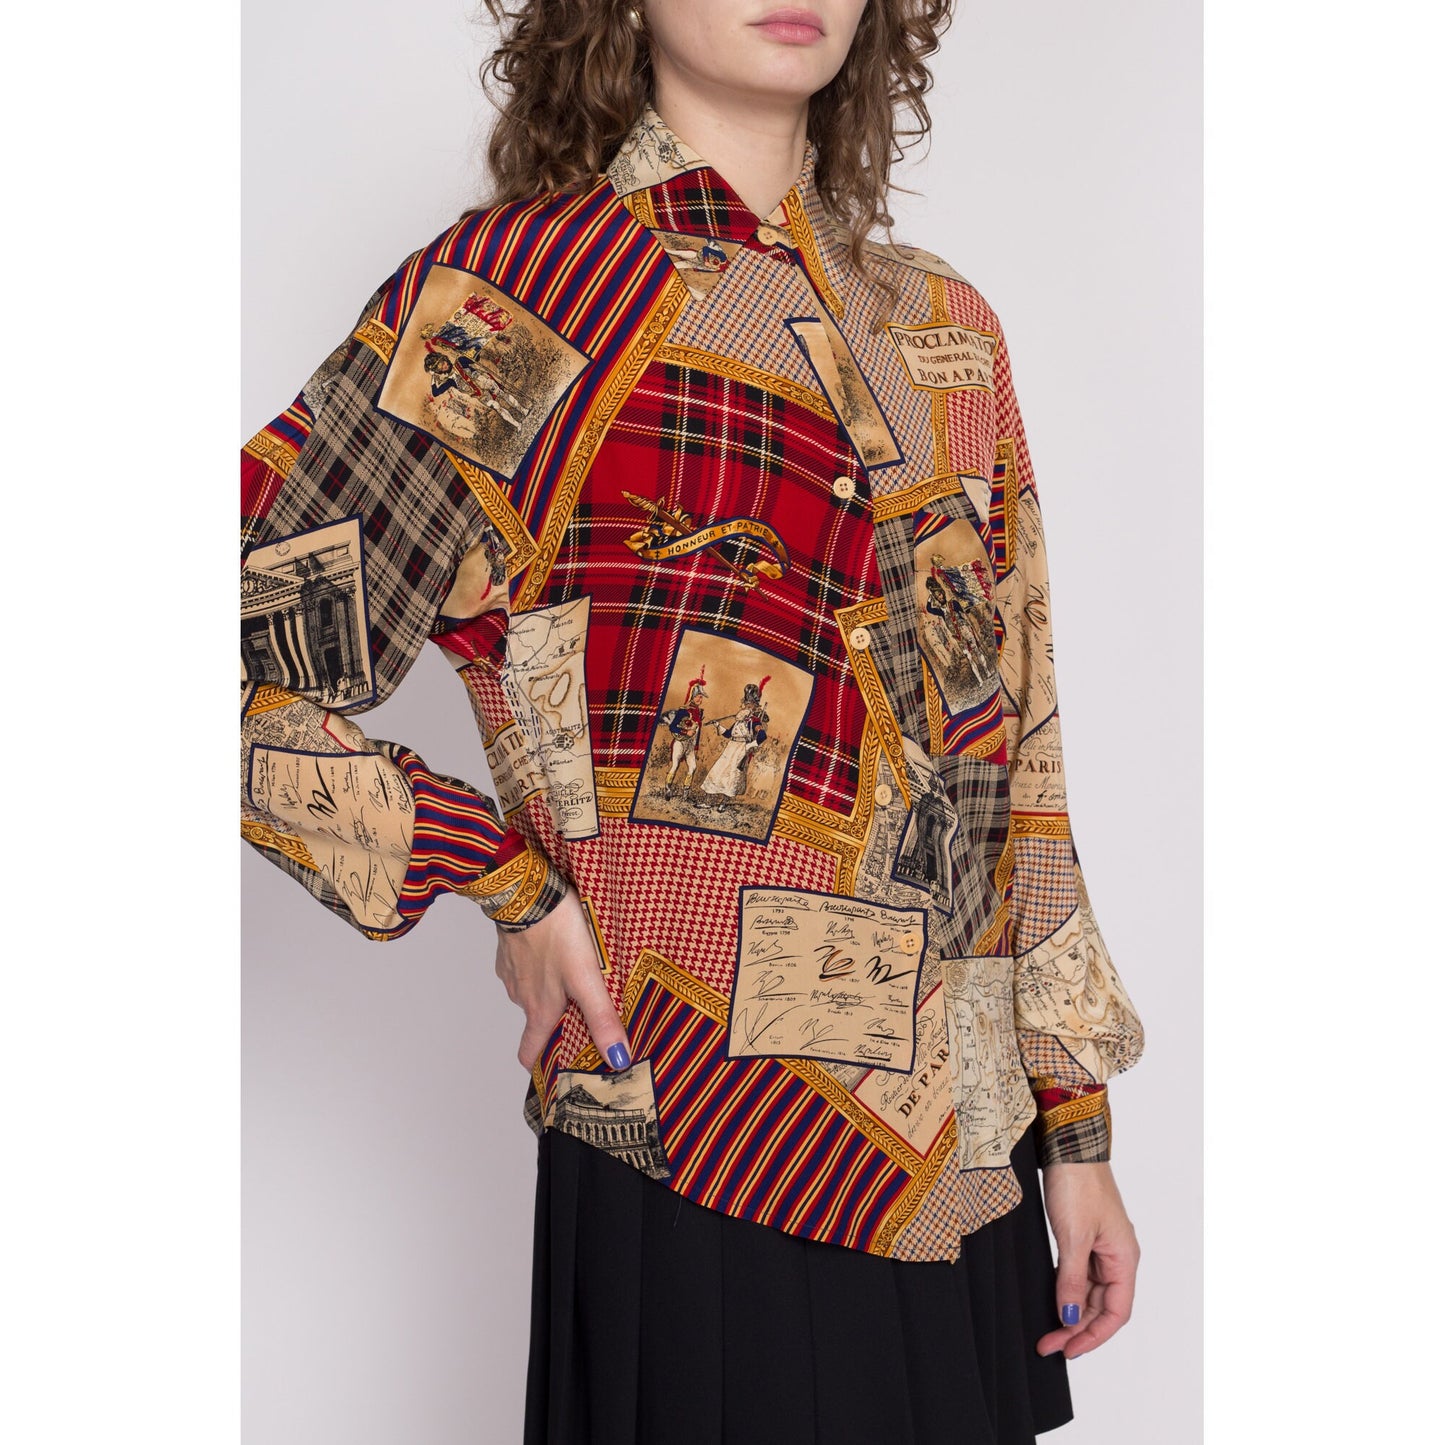 S| 90s Napoleon Bonaparte French Novelty Print Silk Blouse - Small | Vintage Linda Allard For Ellen Tracy Collared Button Up Shirt